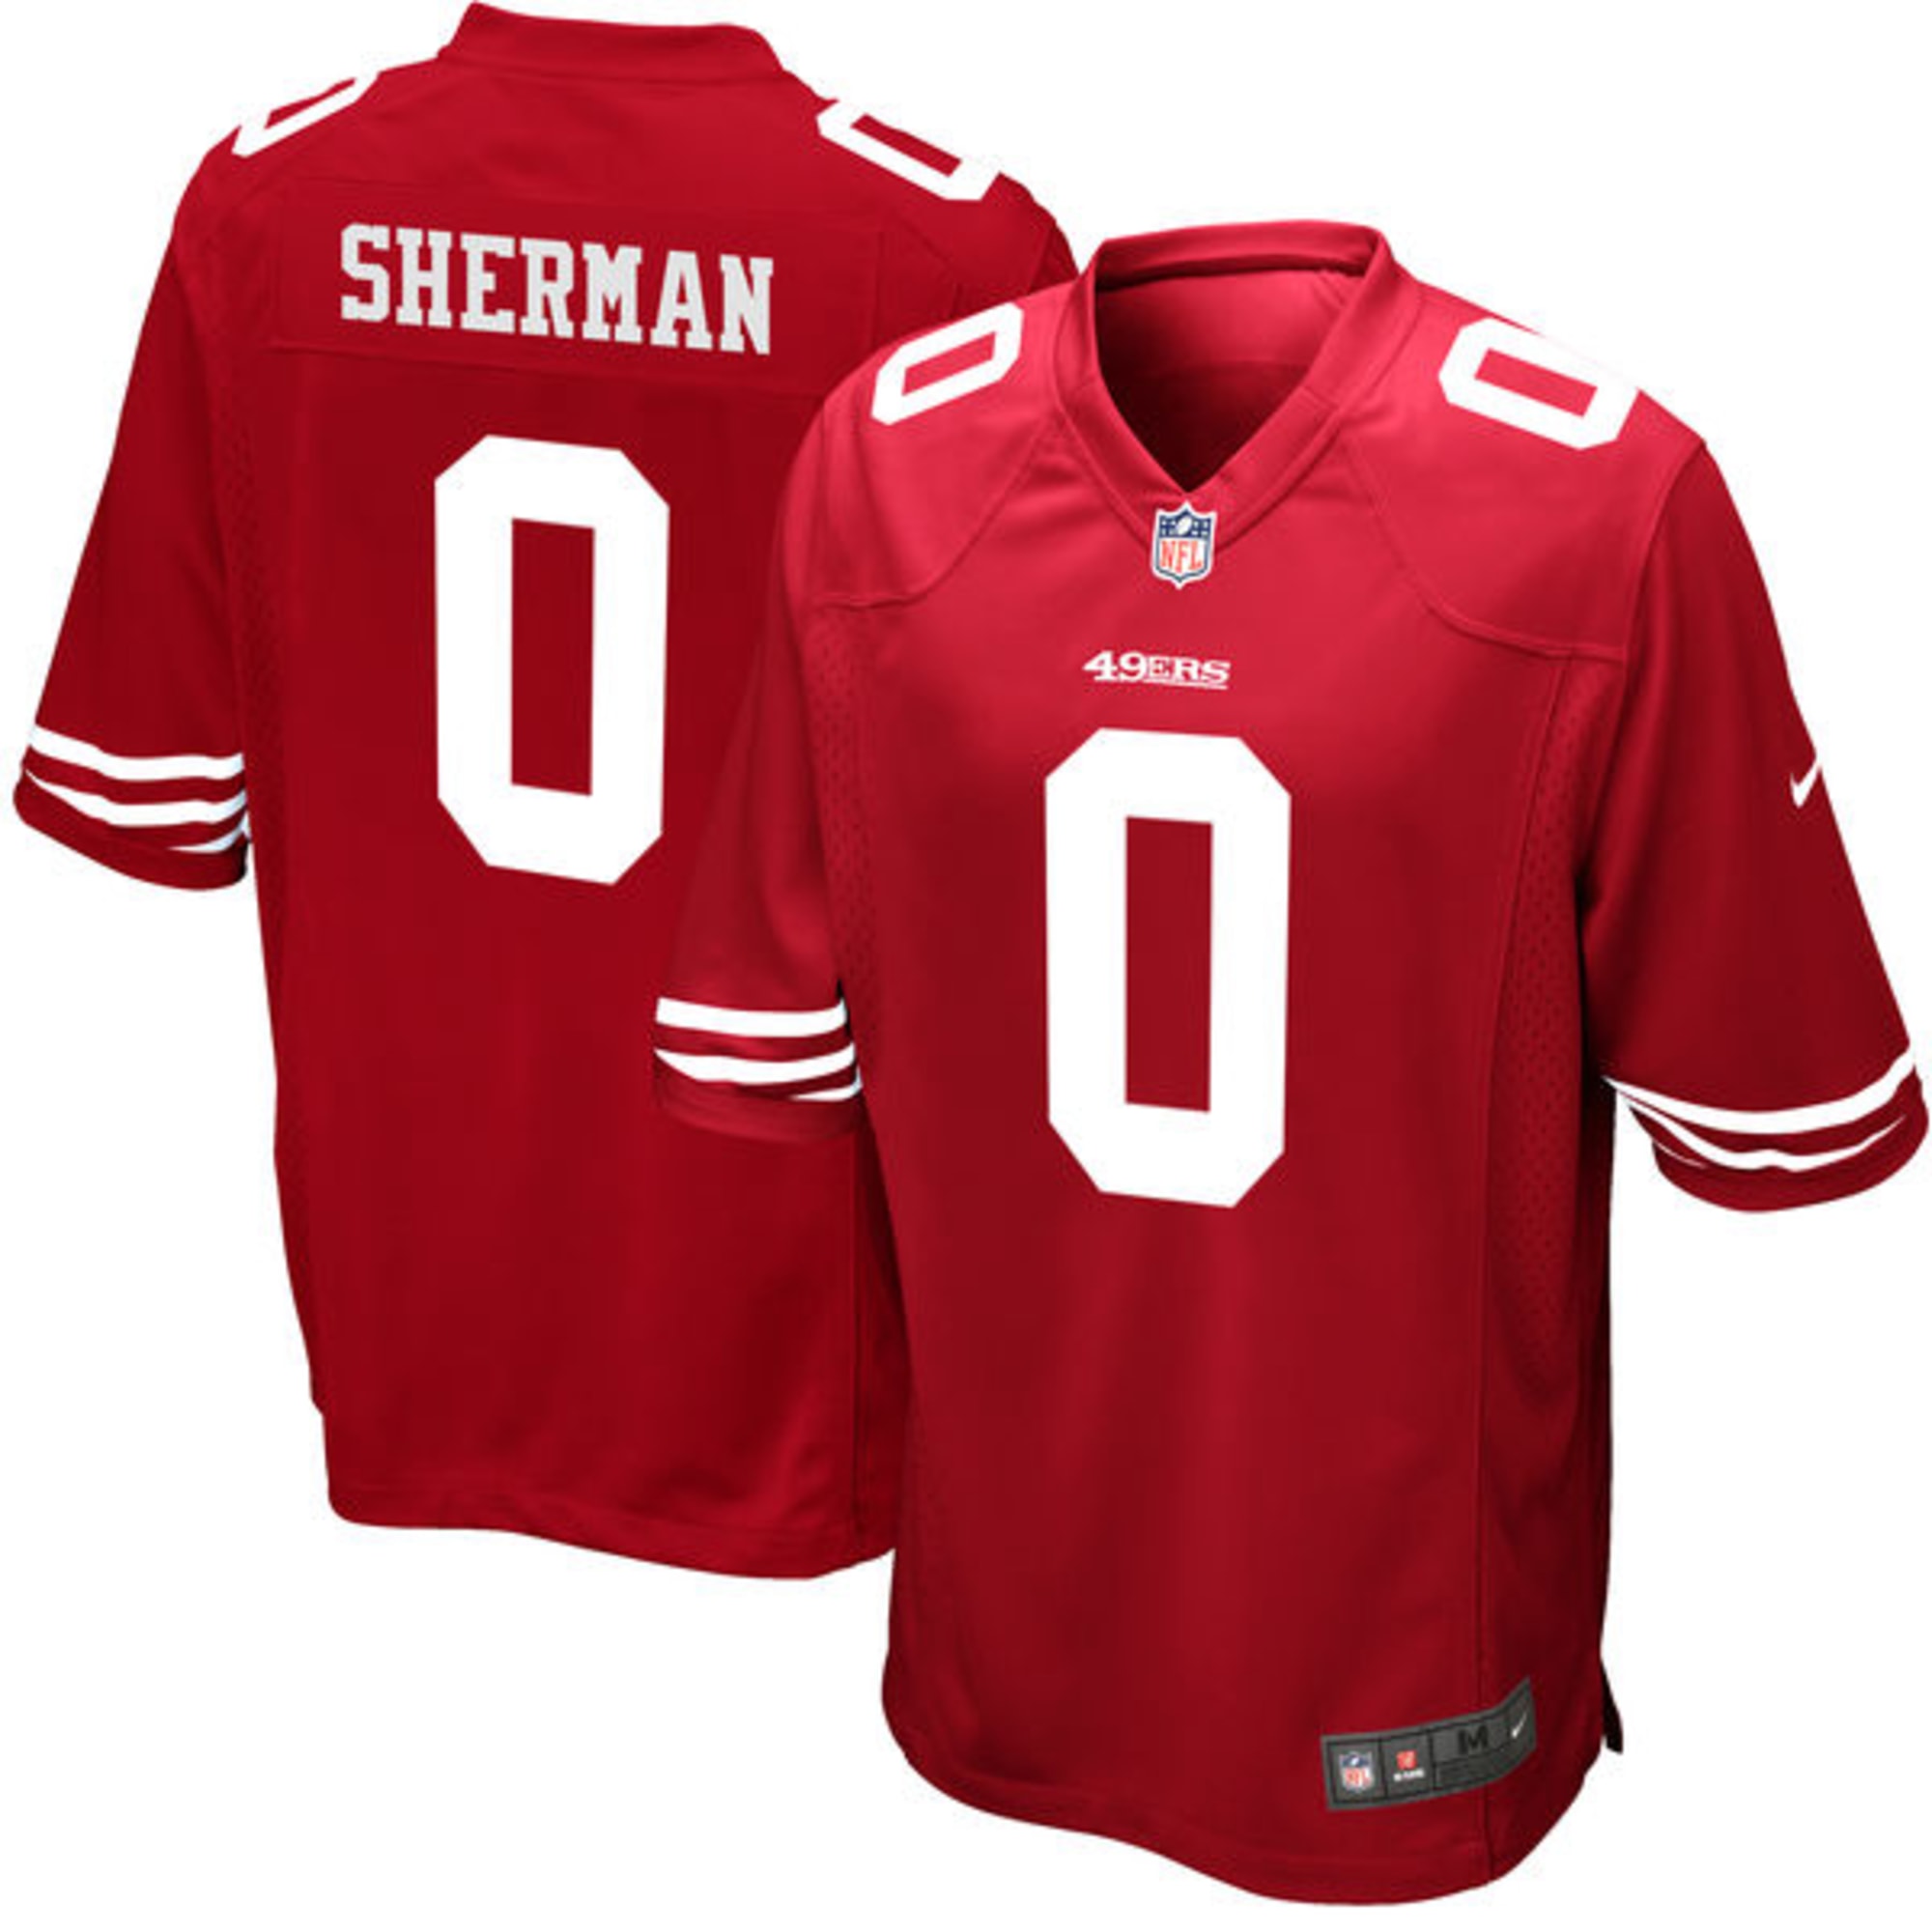 49ers richard sherman jersey